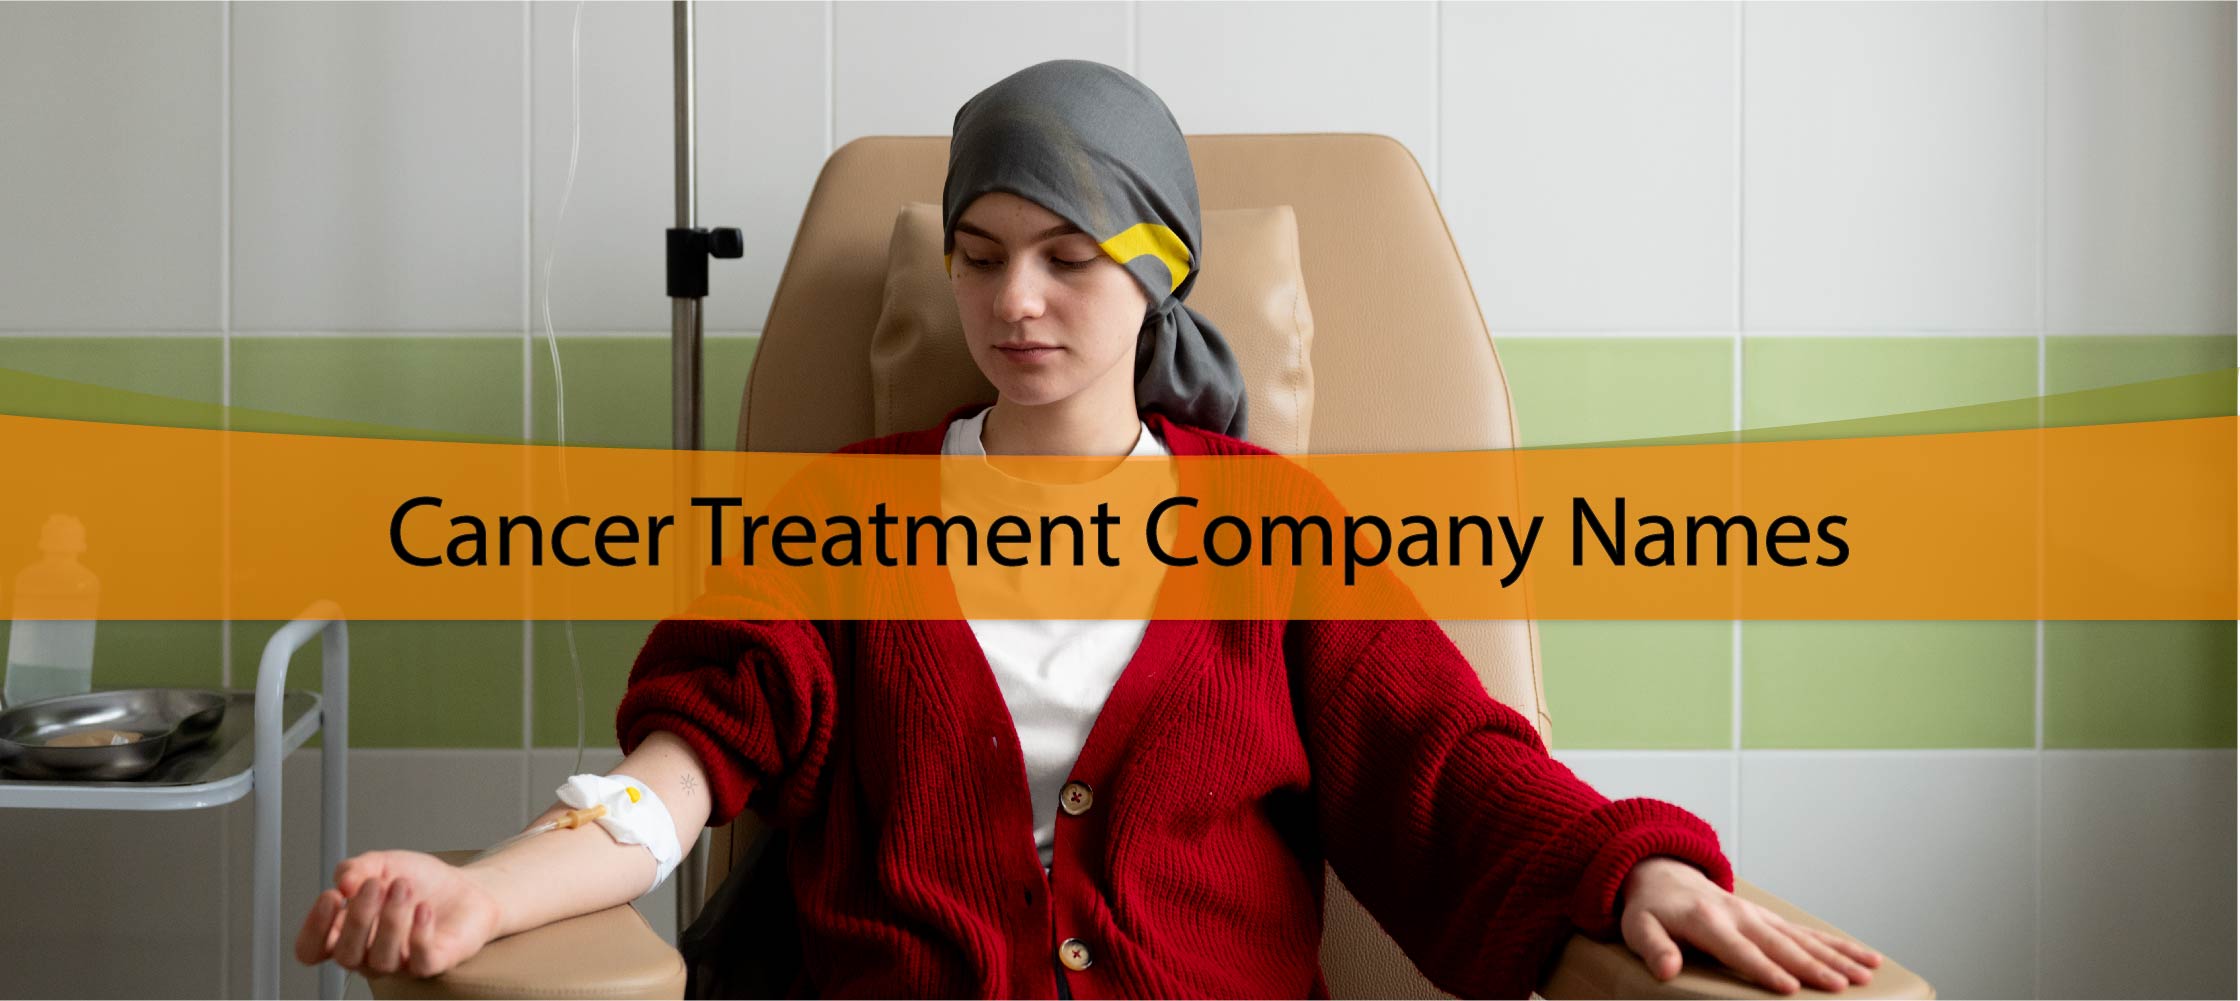 Cancer Treatment Company Names